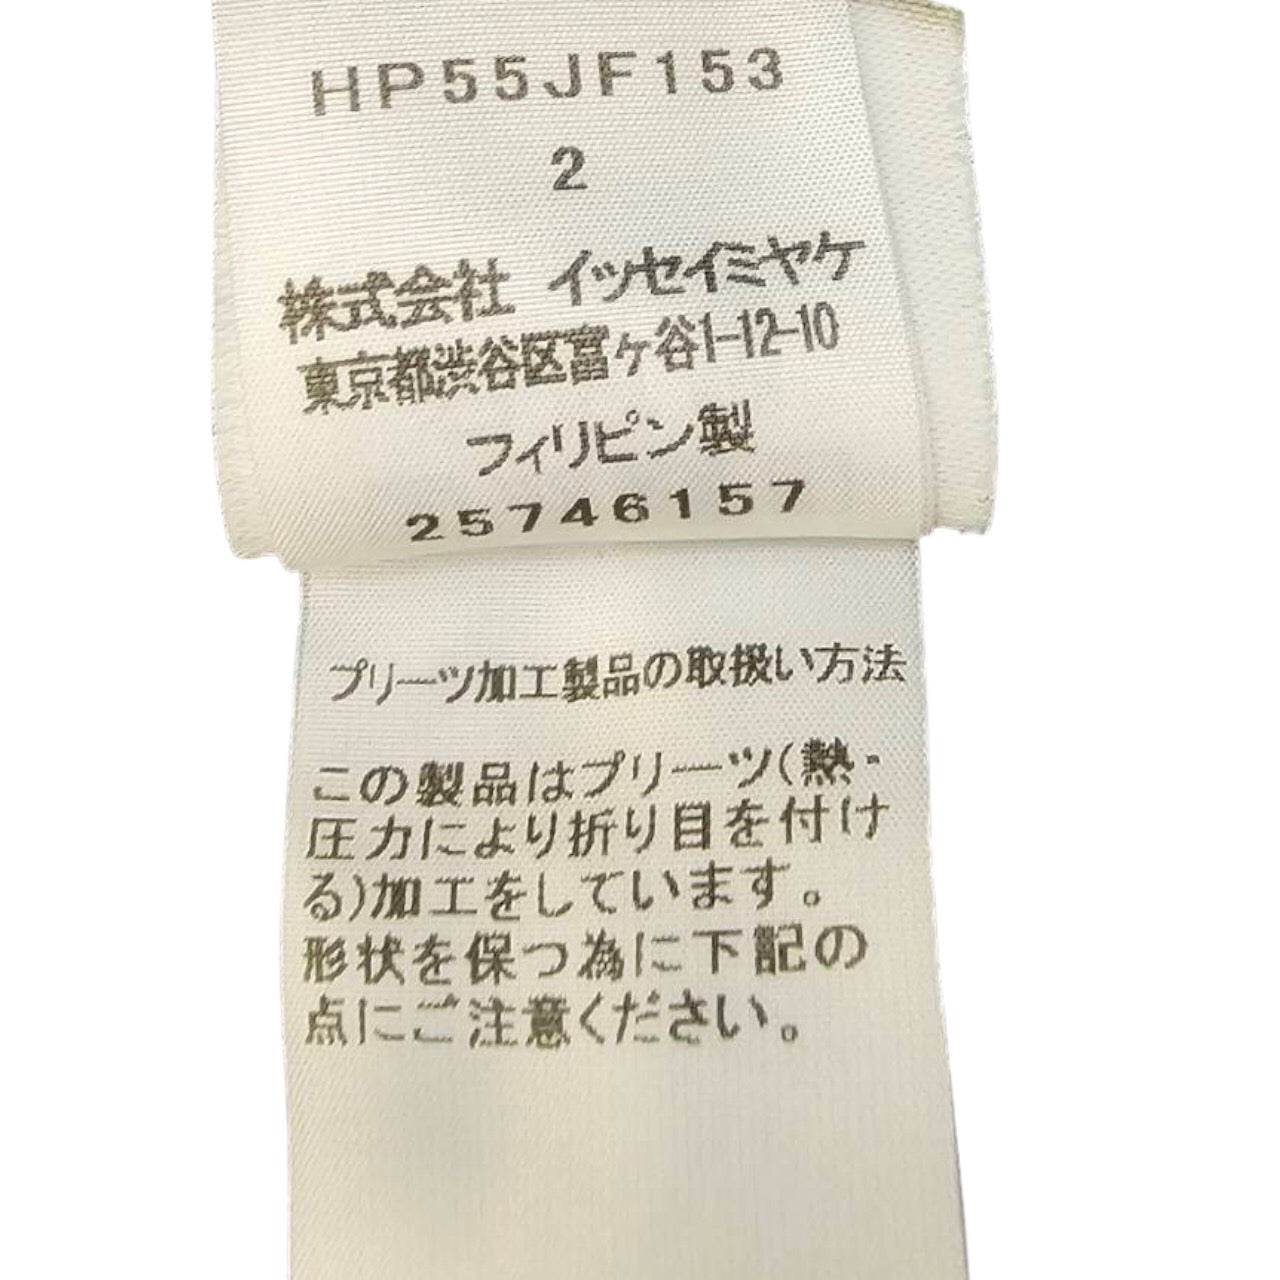 HOMME PLISSE ISSEY MIYAKE(オムプリッセイッセイミヤケ) BASICS pleated tapered pants/ベーシックスプリーツテーパードパンツ HP55JF153 SIZE 2(M) ネイビー